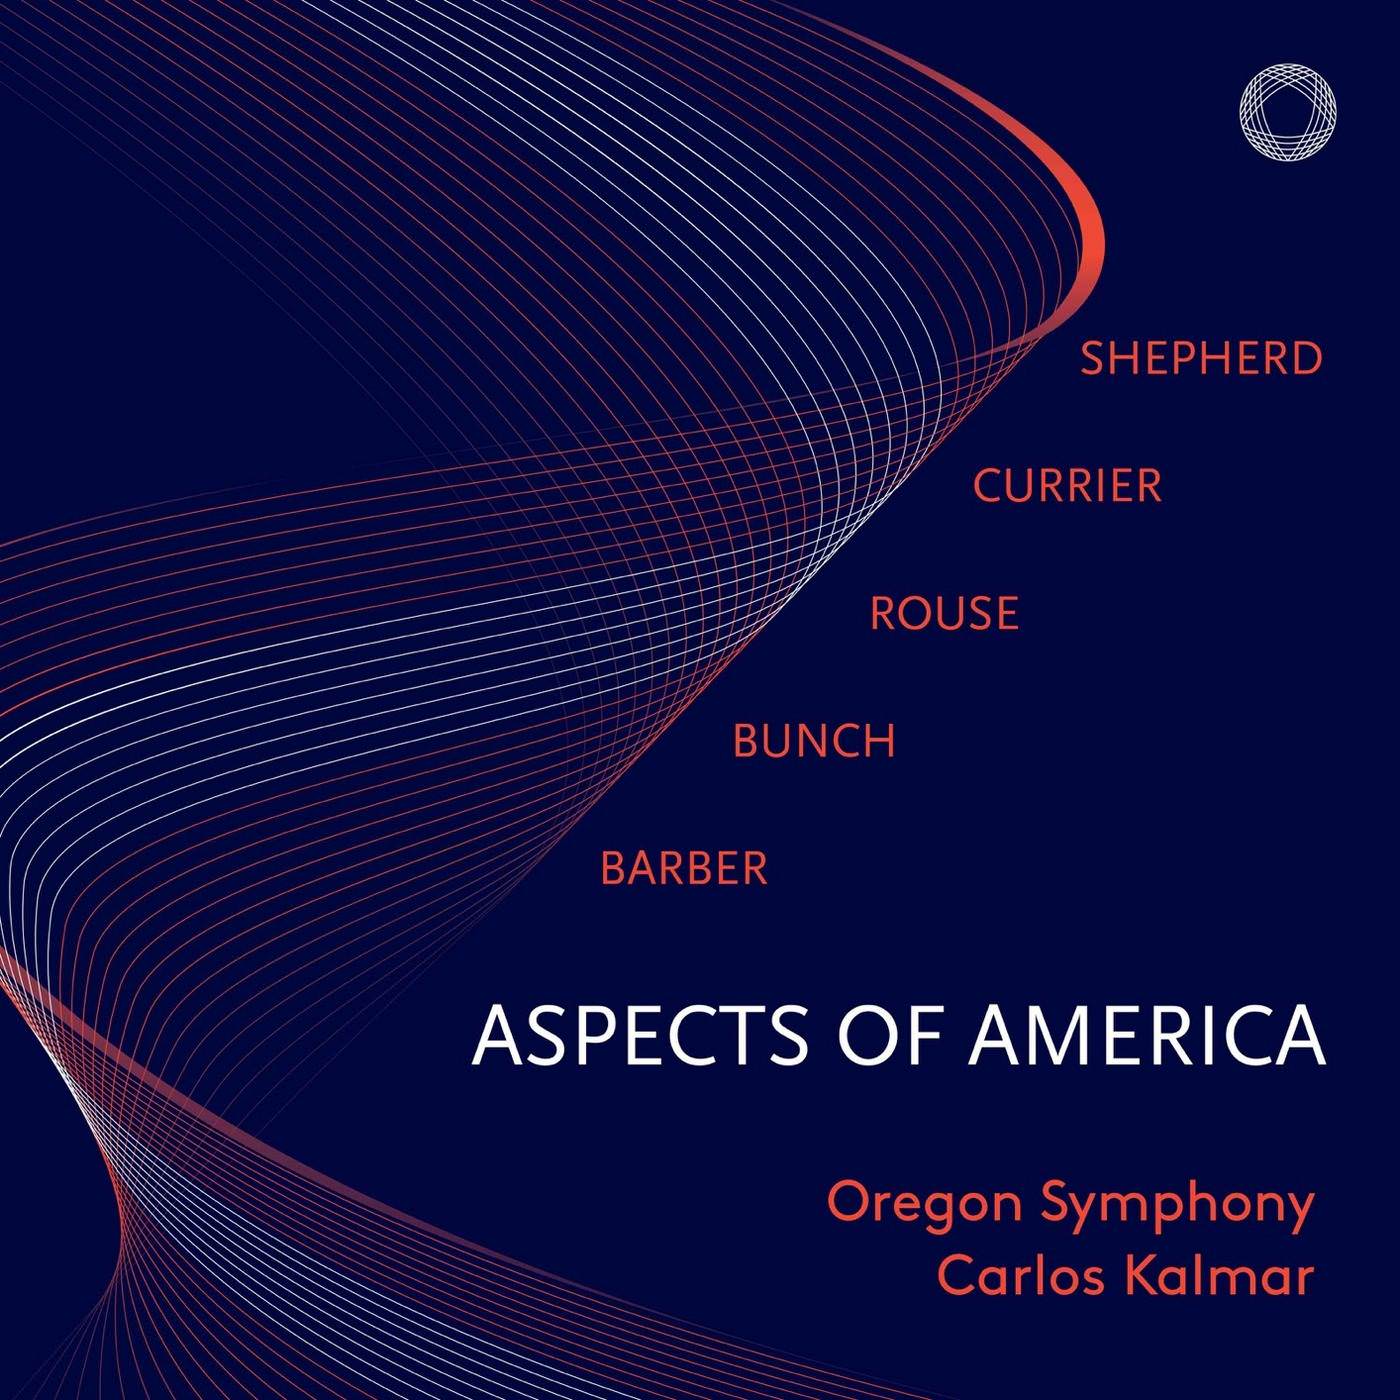 The Oregon Symphony & Carlos Kalmar - Aspects of America (Live) (2018) [FLAC 24bit/96kHz]